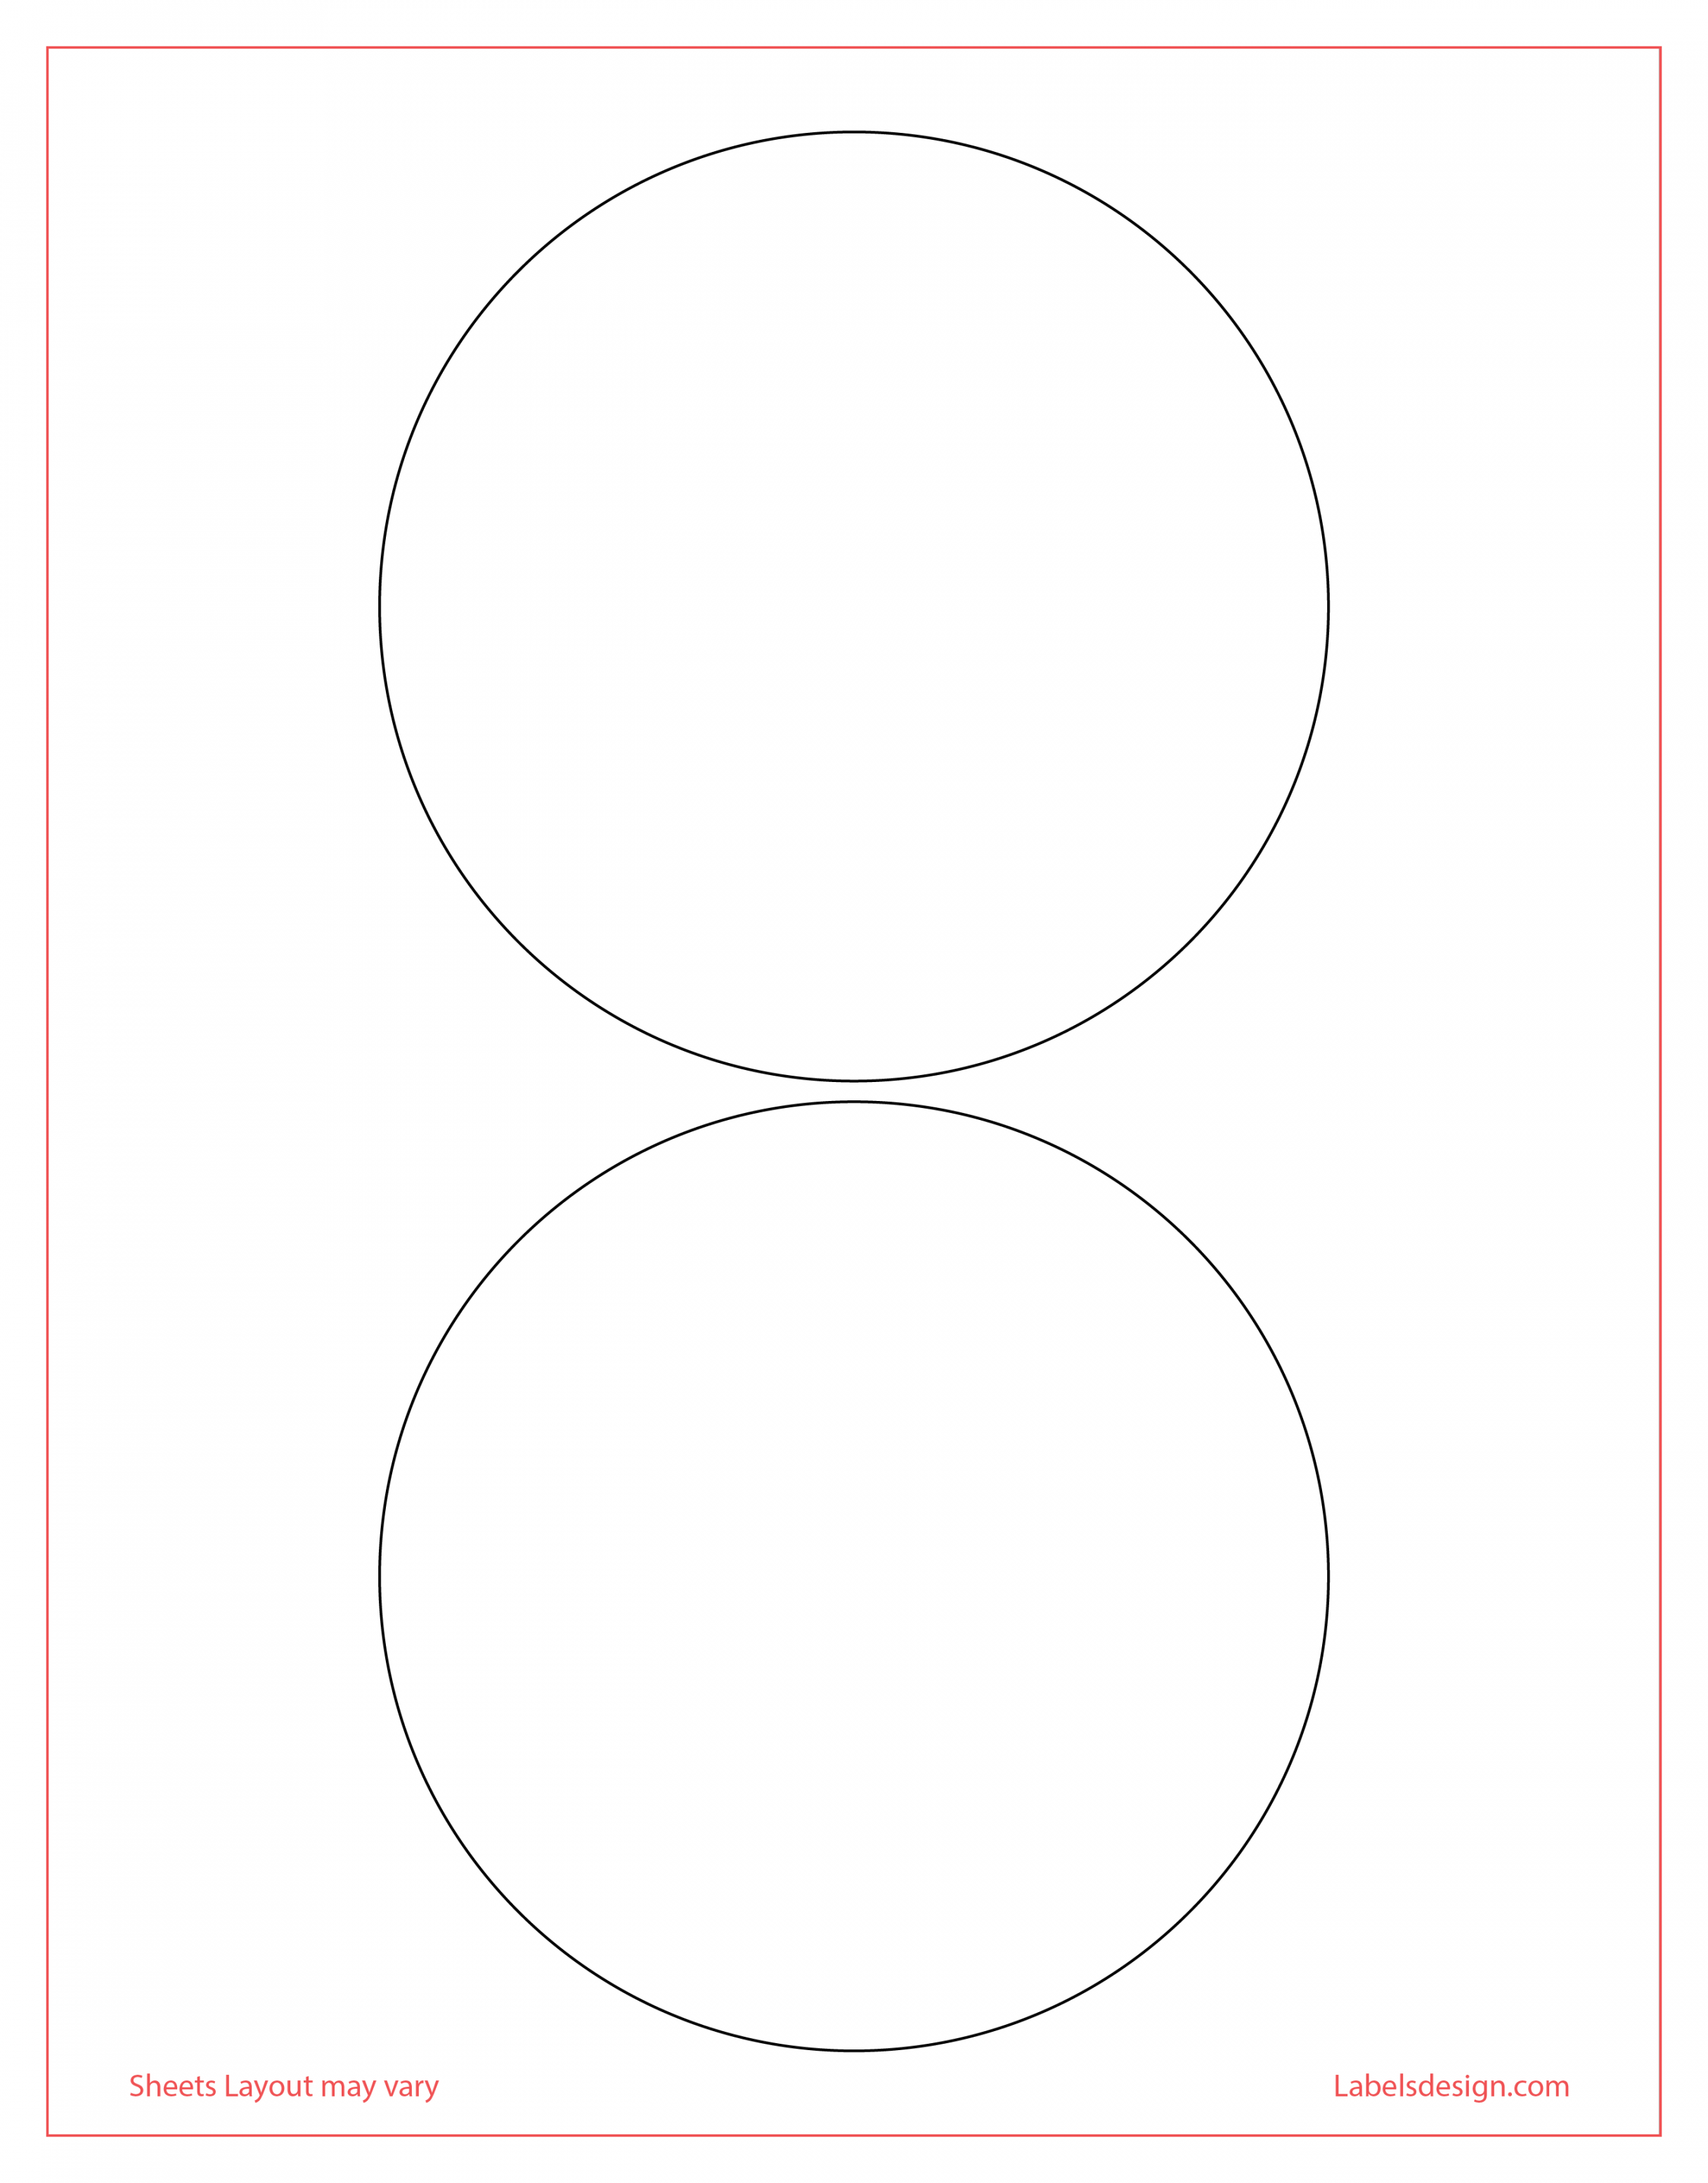 inch Circle - Labelsdesign - 5 Inch Circle